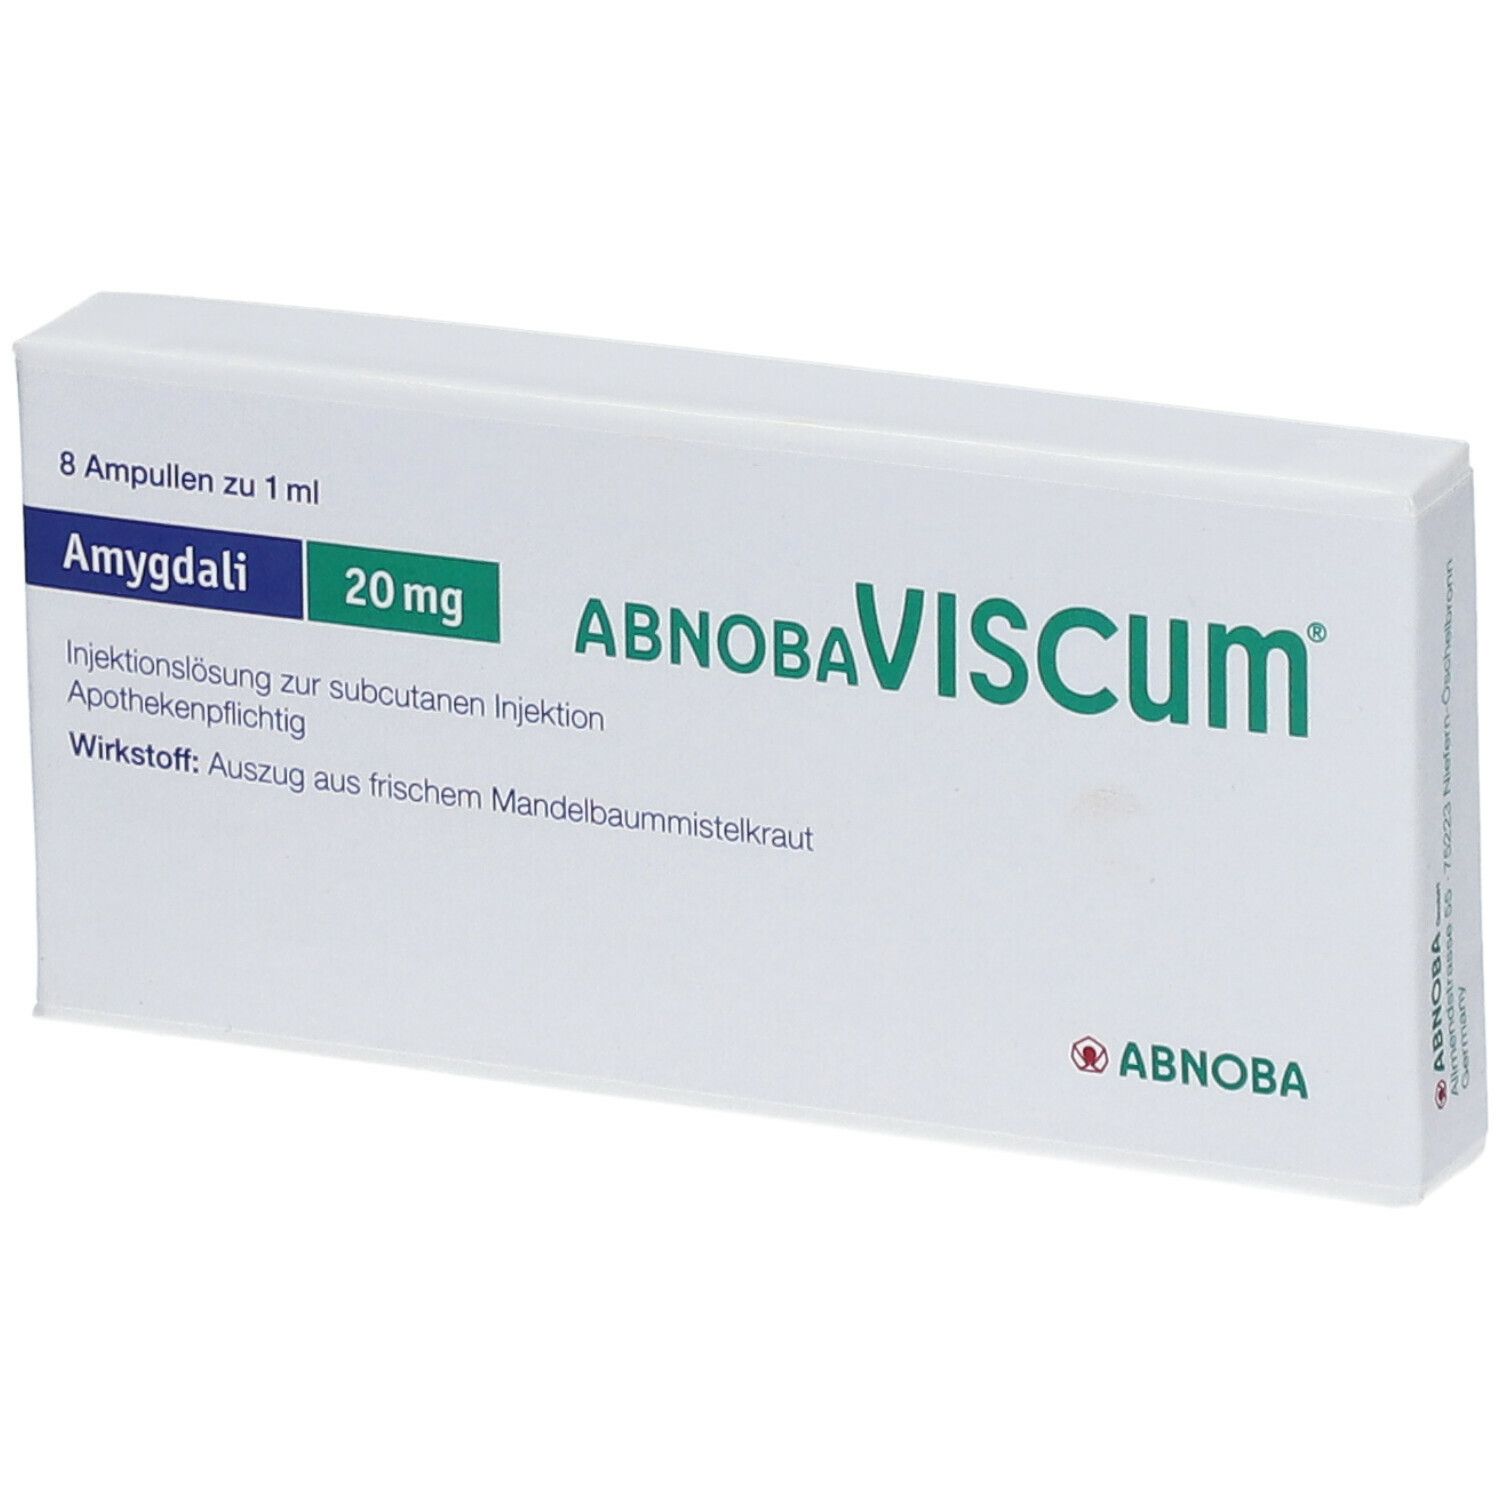 abnobaVISCUM® Amygdali 20 mg Ampullen